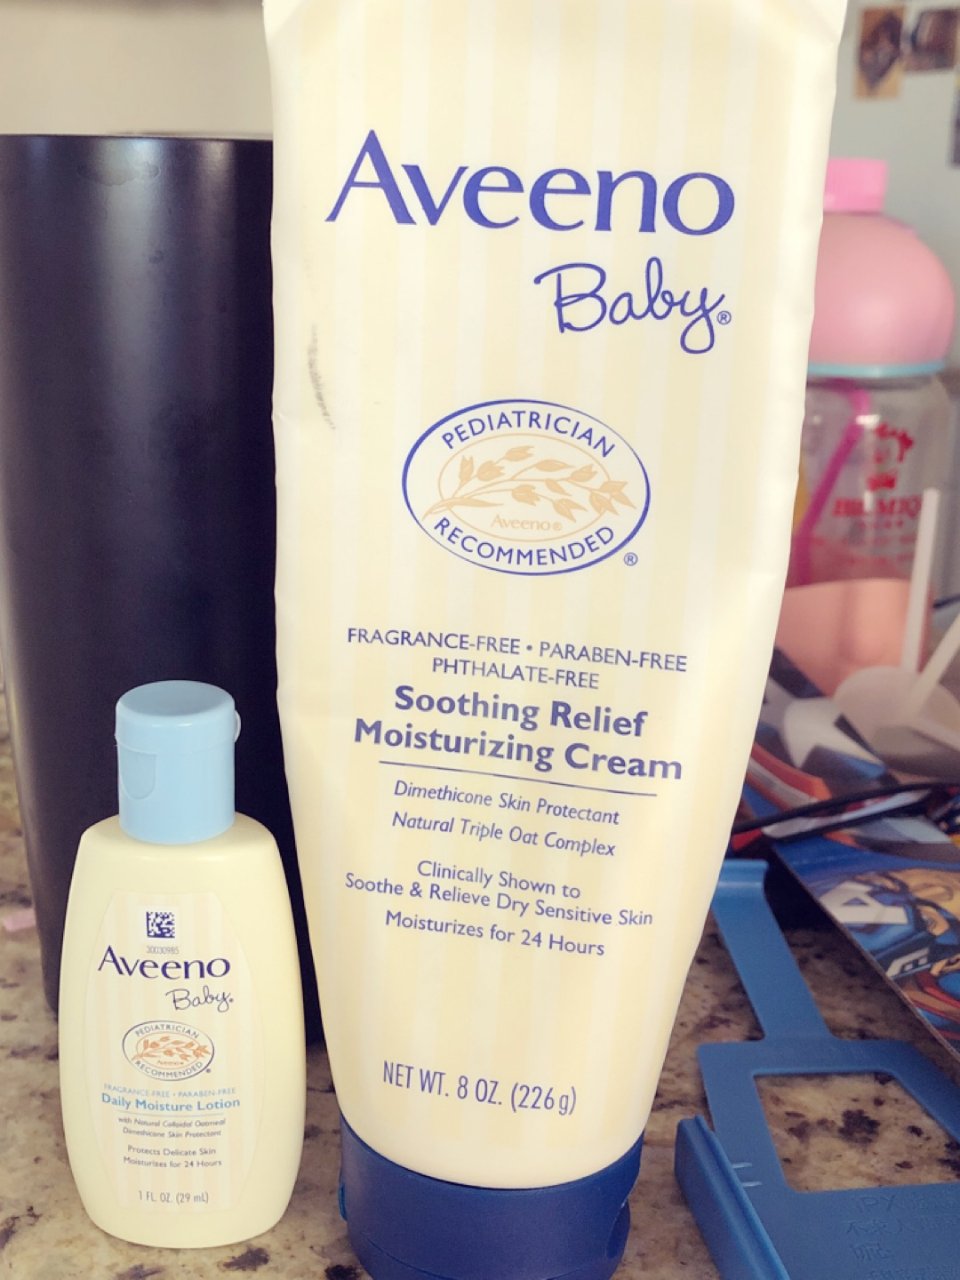 Aveeno 艾维诺,body lotion,脸霜,立个flag,婴幼儿用品